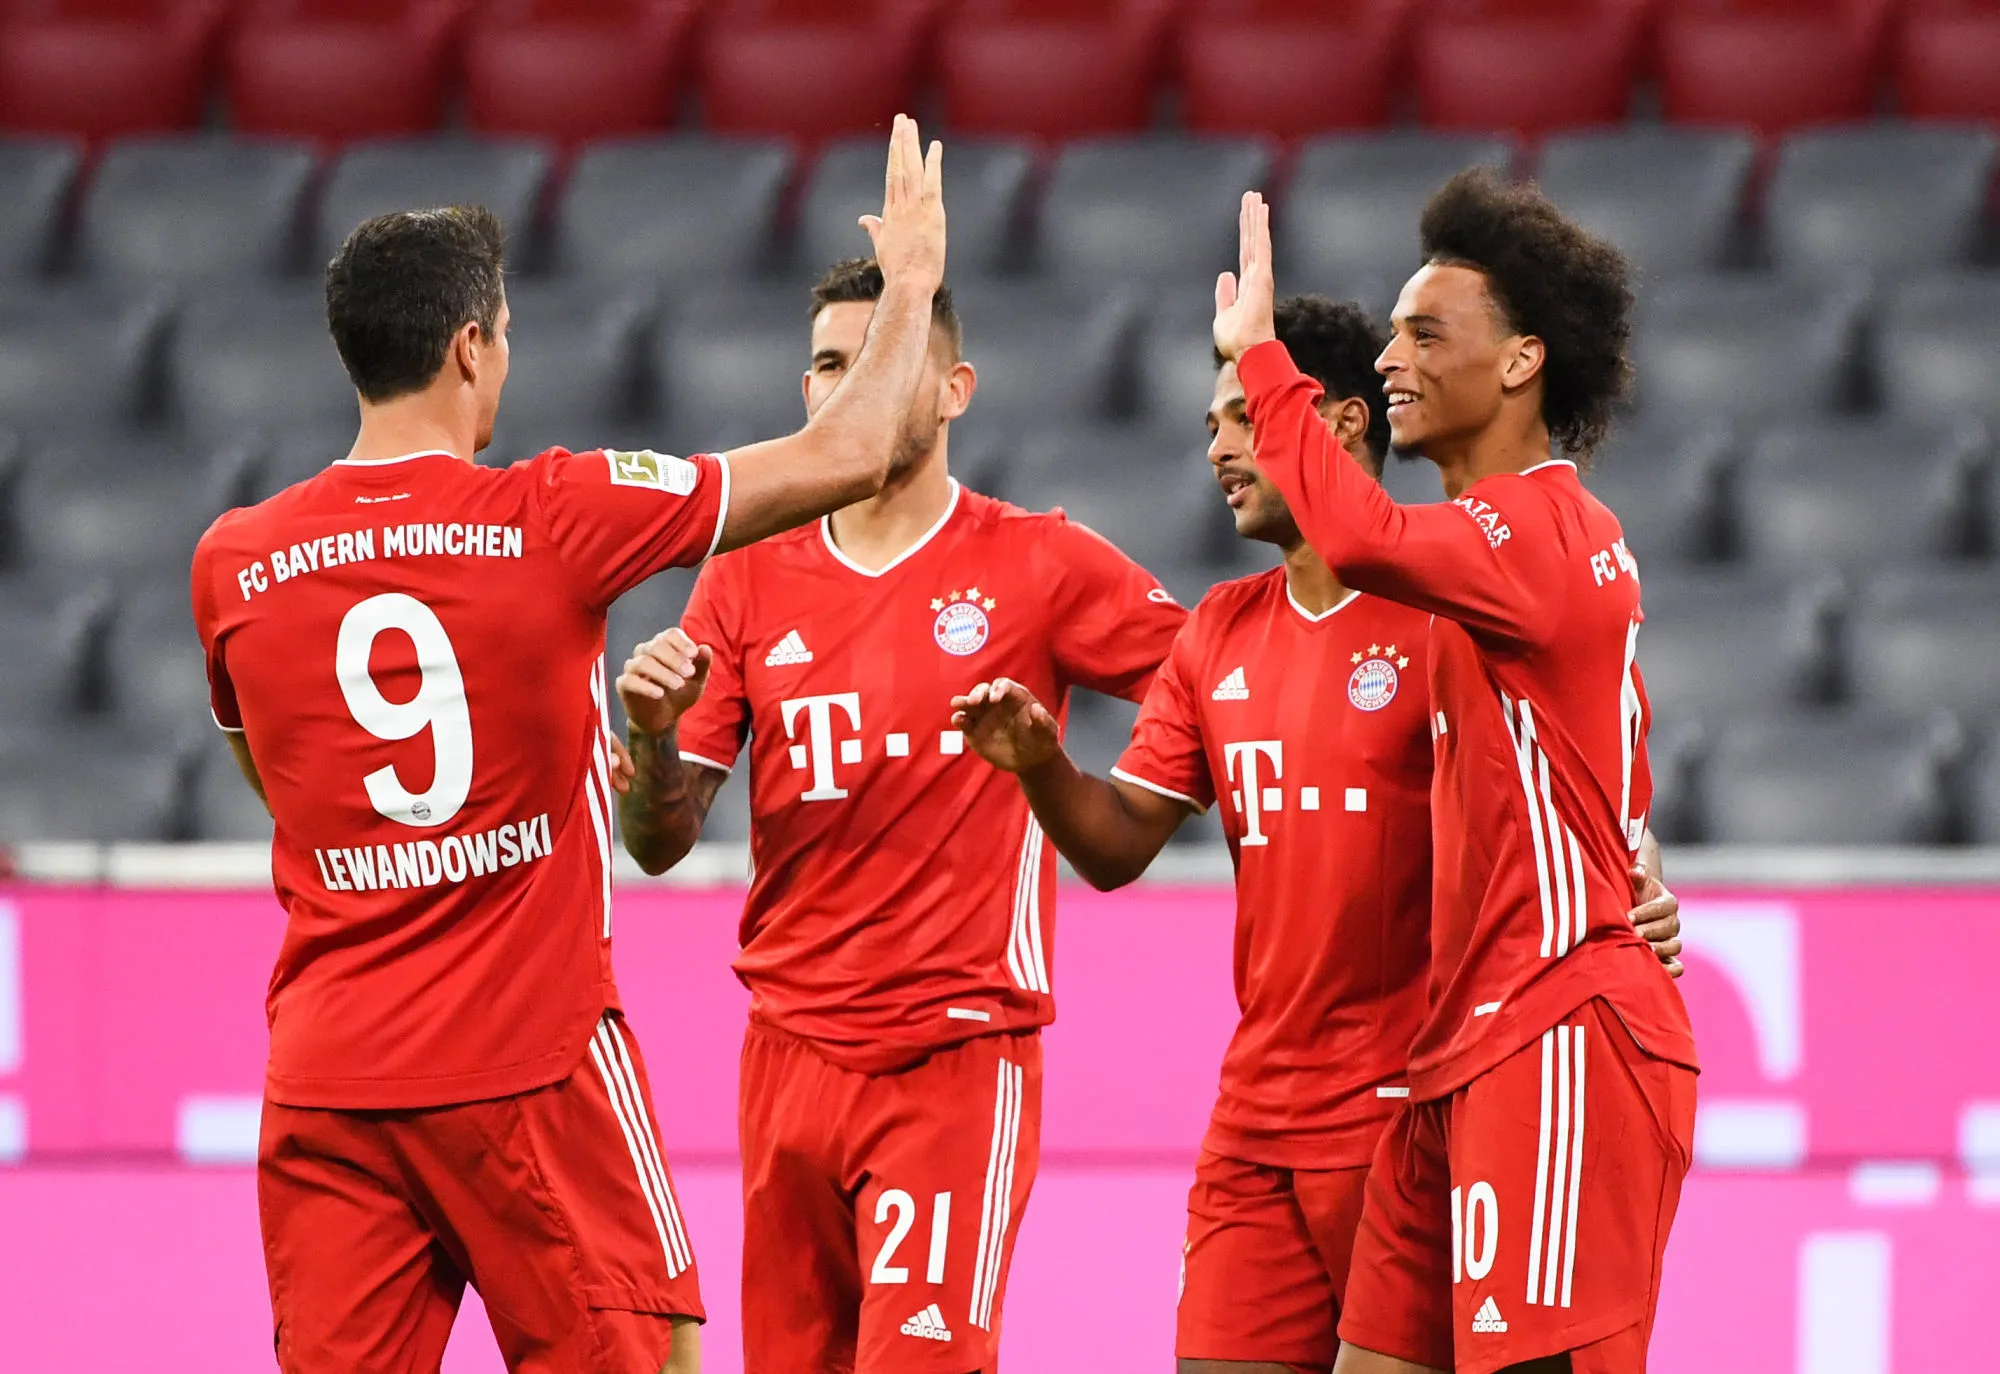 Pronostic Borussia Mönchengladbach Bayern Munich : Analyse, cotes et prono du match de Bundesliga